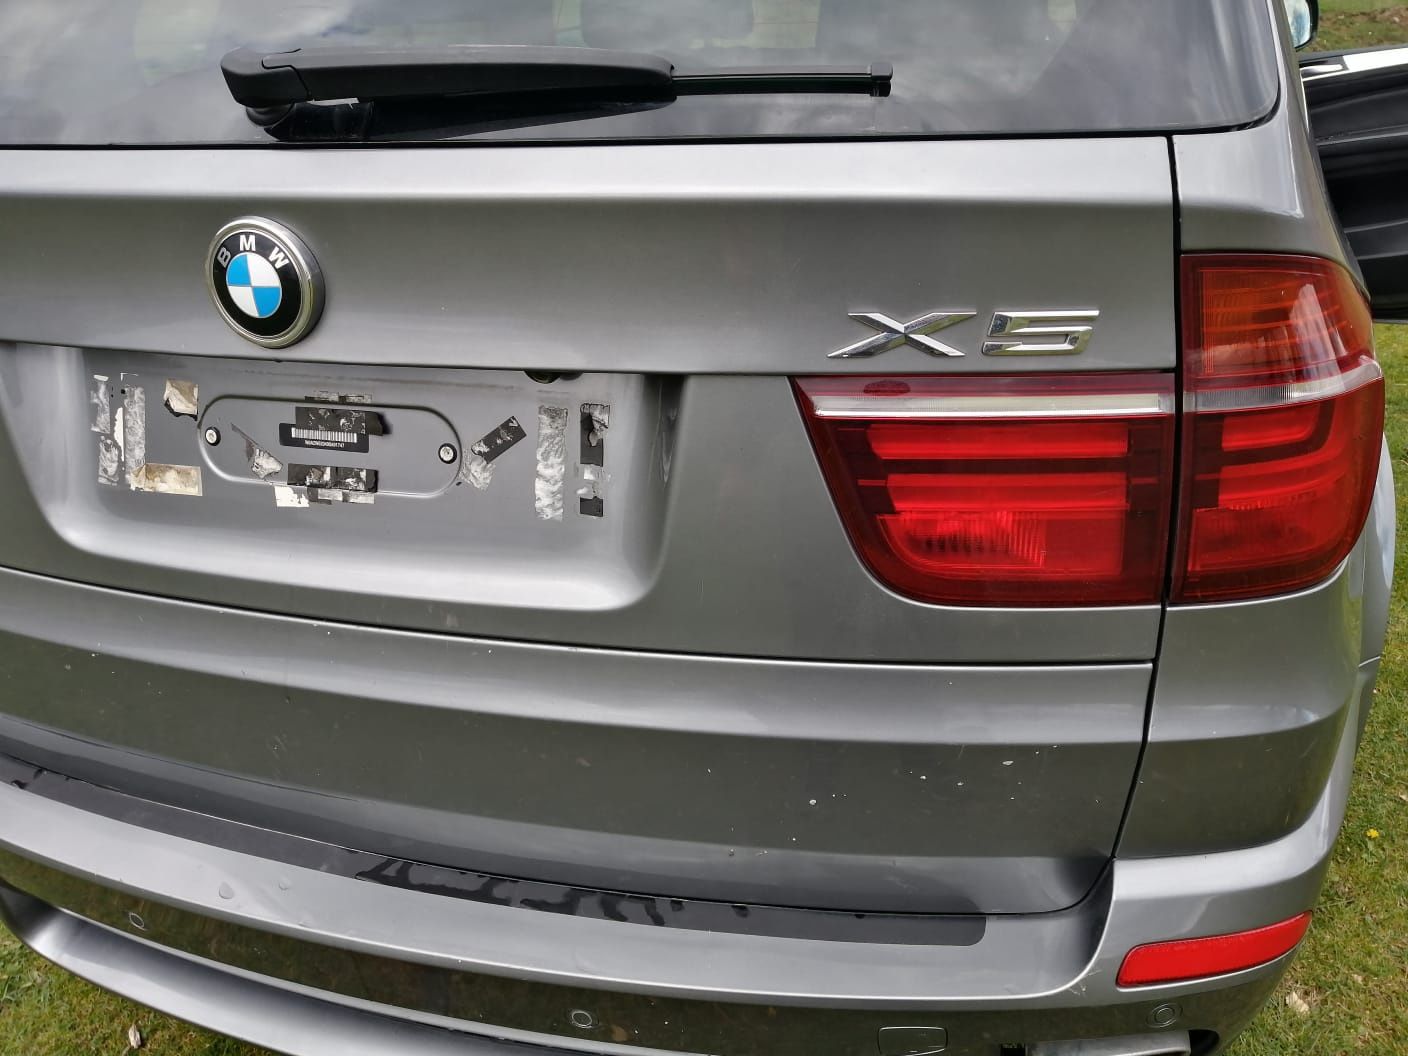 Piese BMW X5 3.0 4x4 an 2010-2014 euro 5